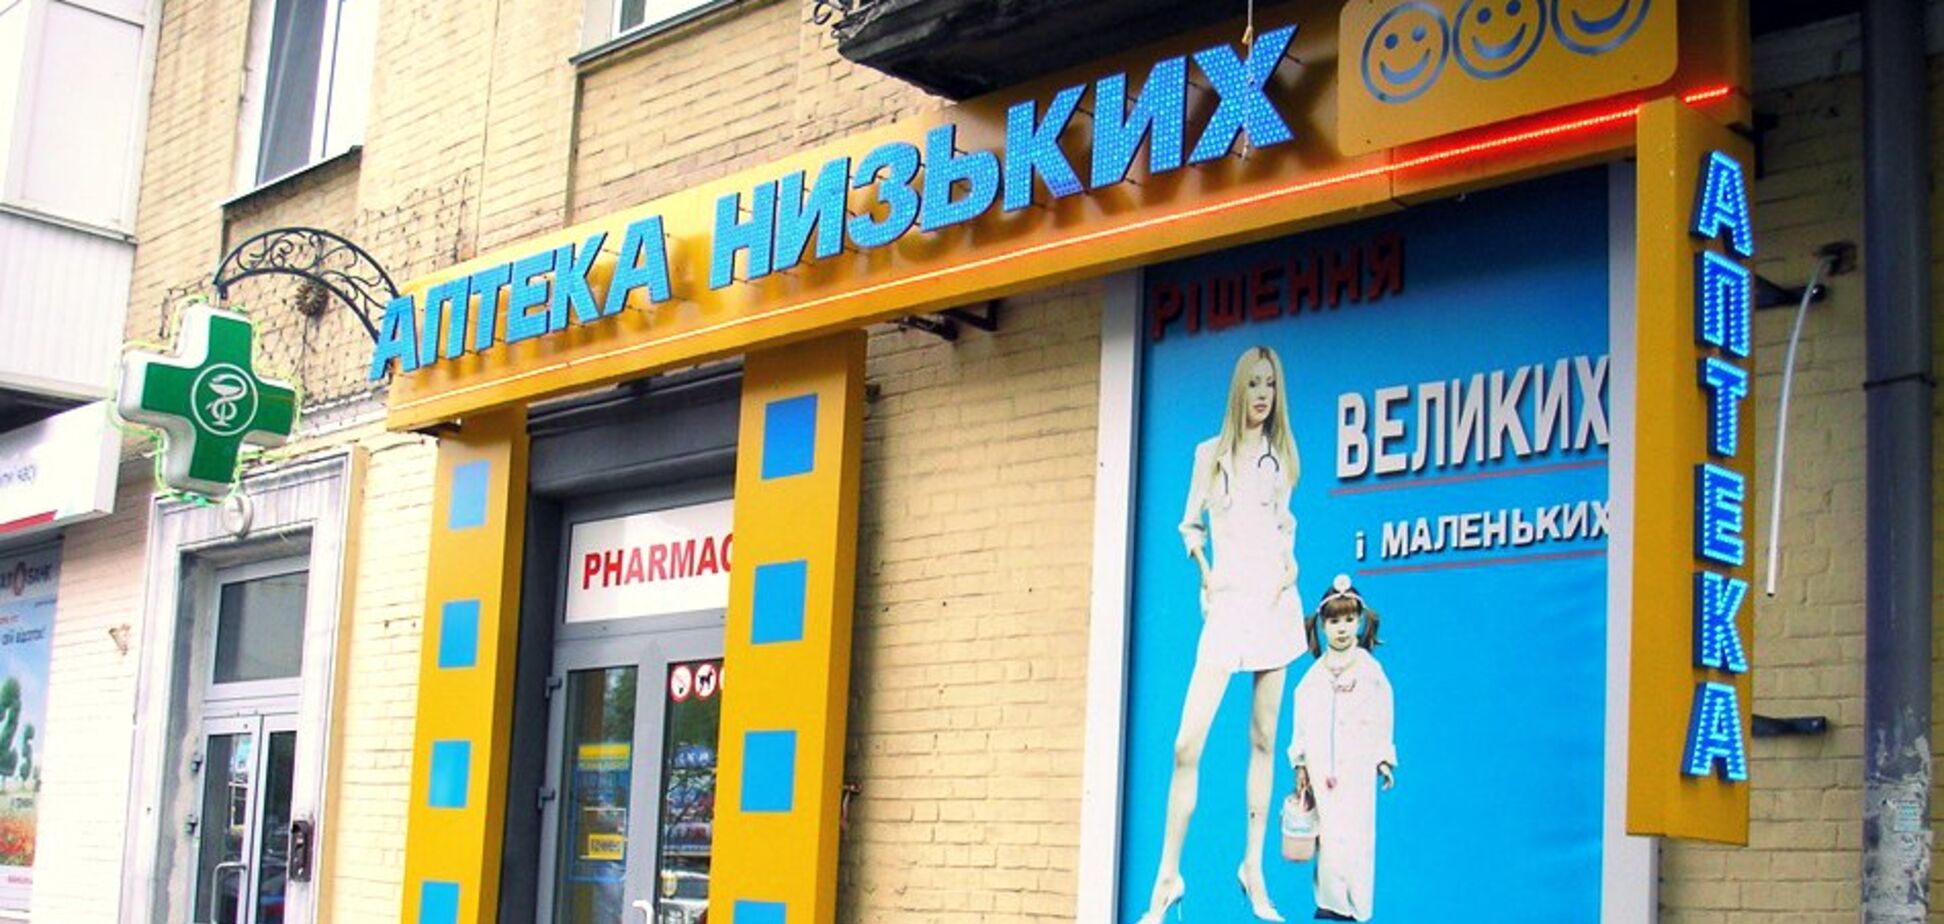 Акція 'Лютий березень' в перших роботизованих аптеках України